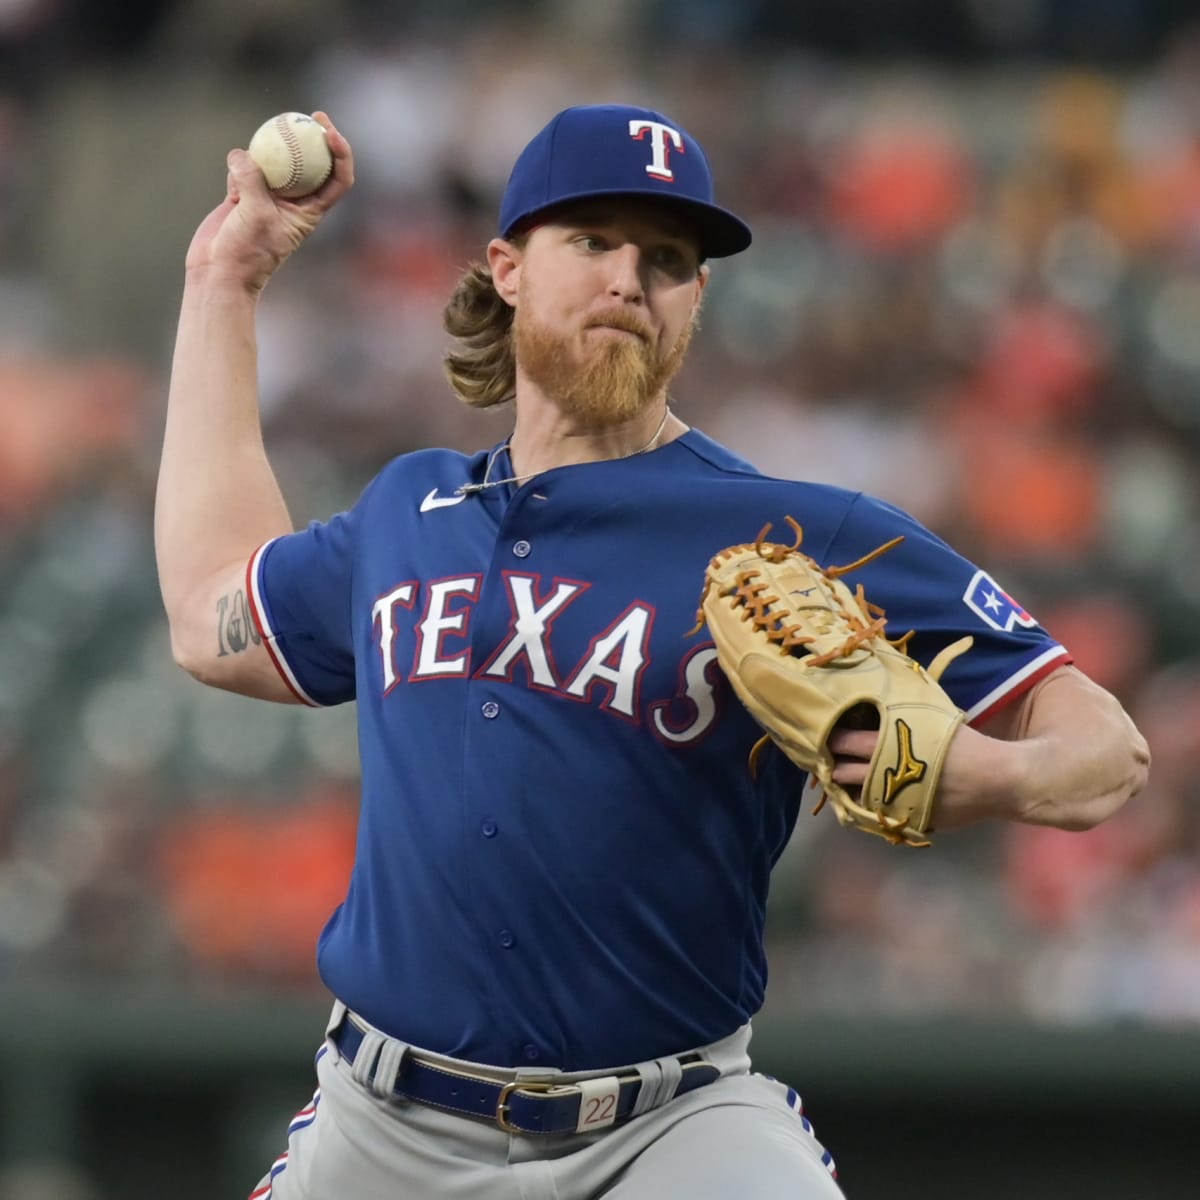 Ex-Rockies starter Jon Gray signing with Texas Rangers – The Denver Post